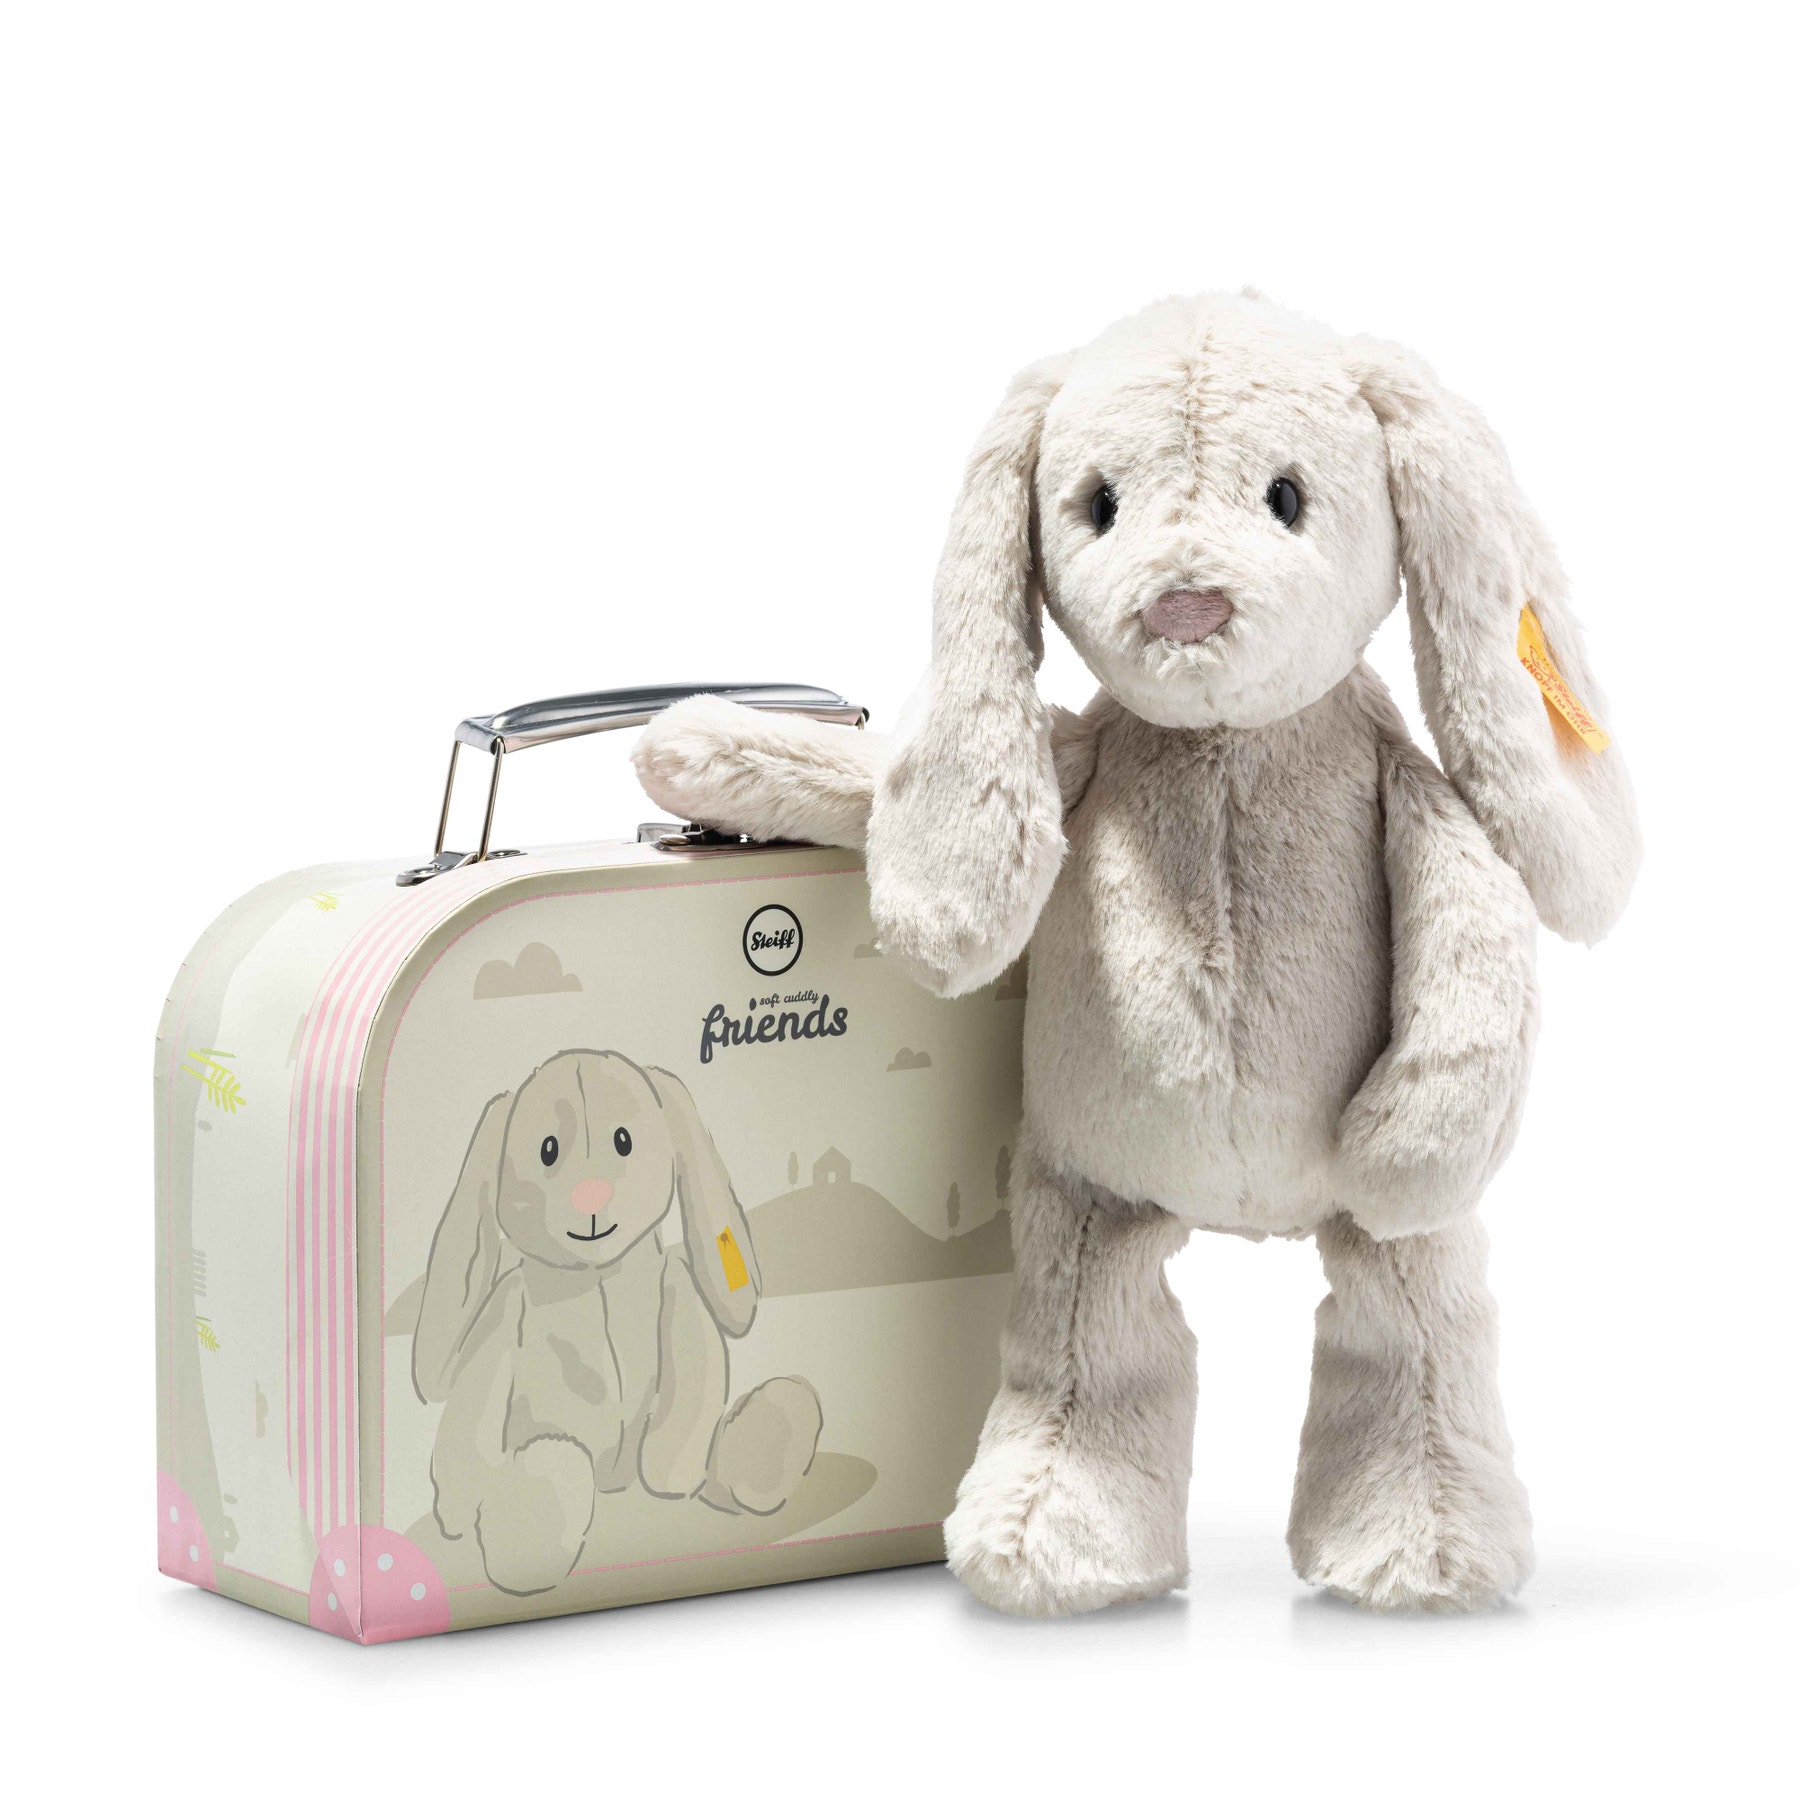 Hoppie rabbit in suitcase